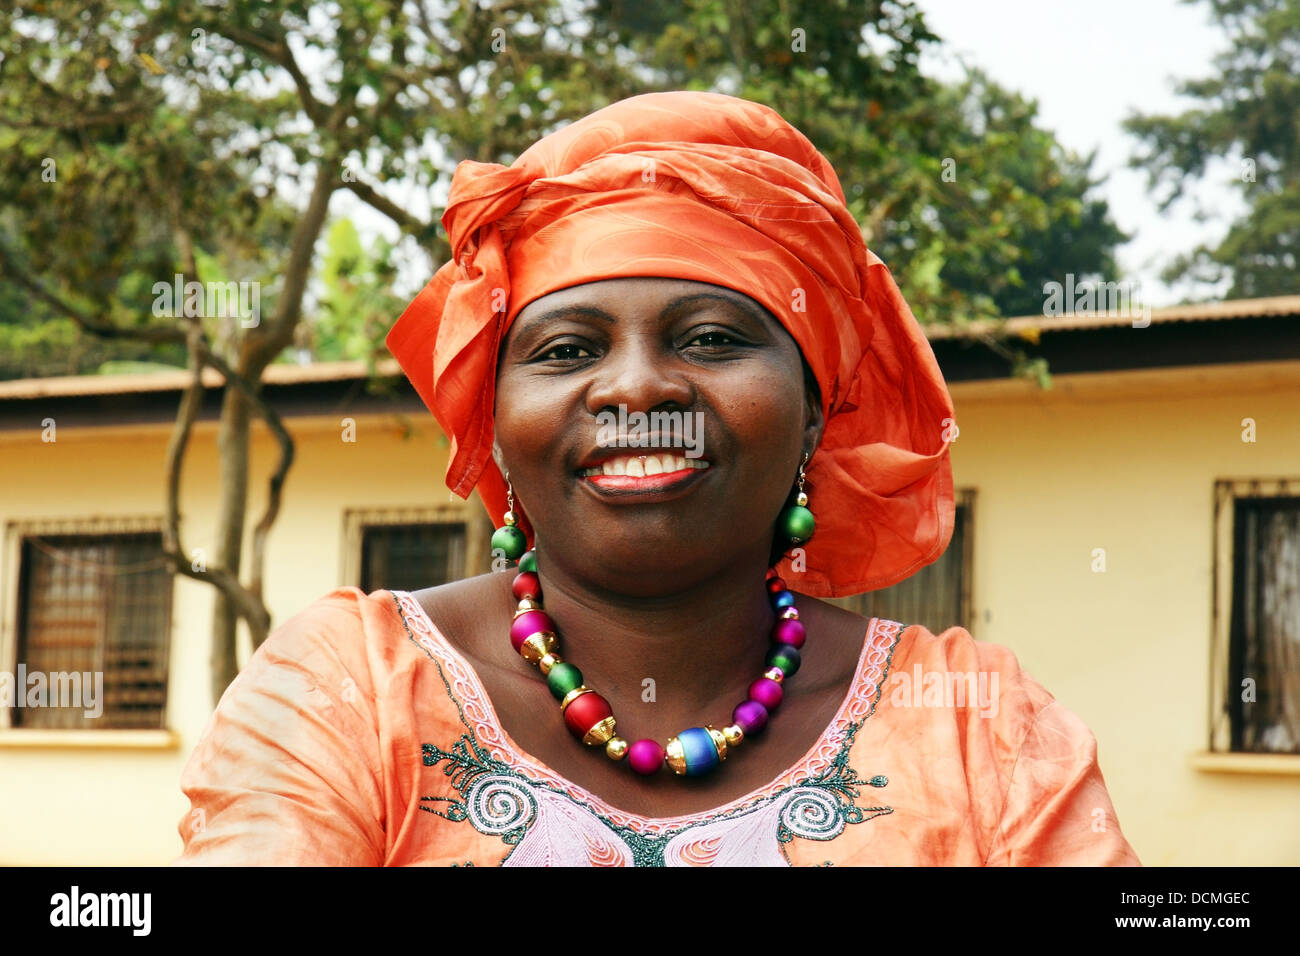 Sorridente donna africana in foulard arancione Foto Stock